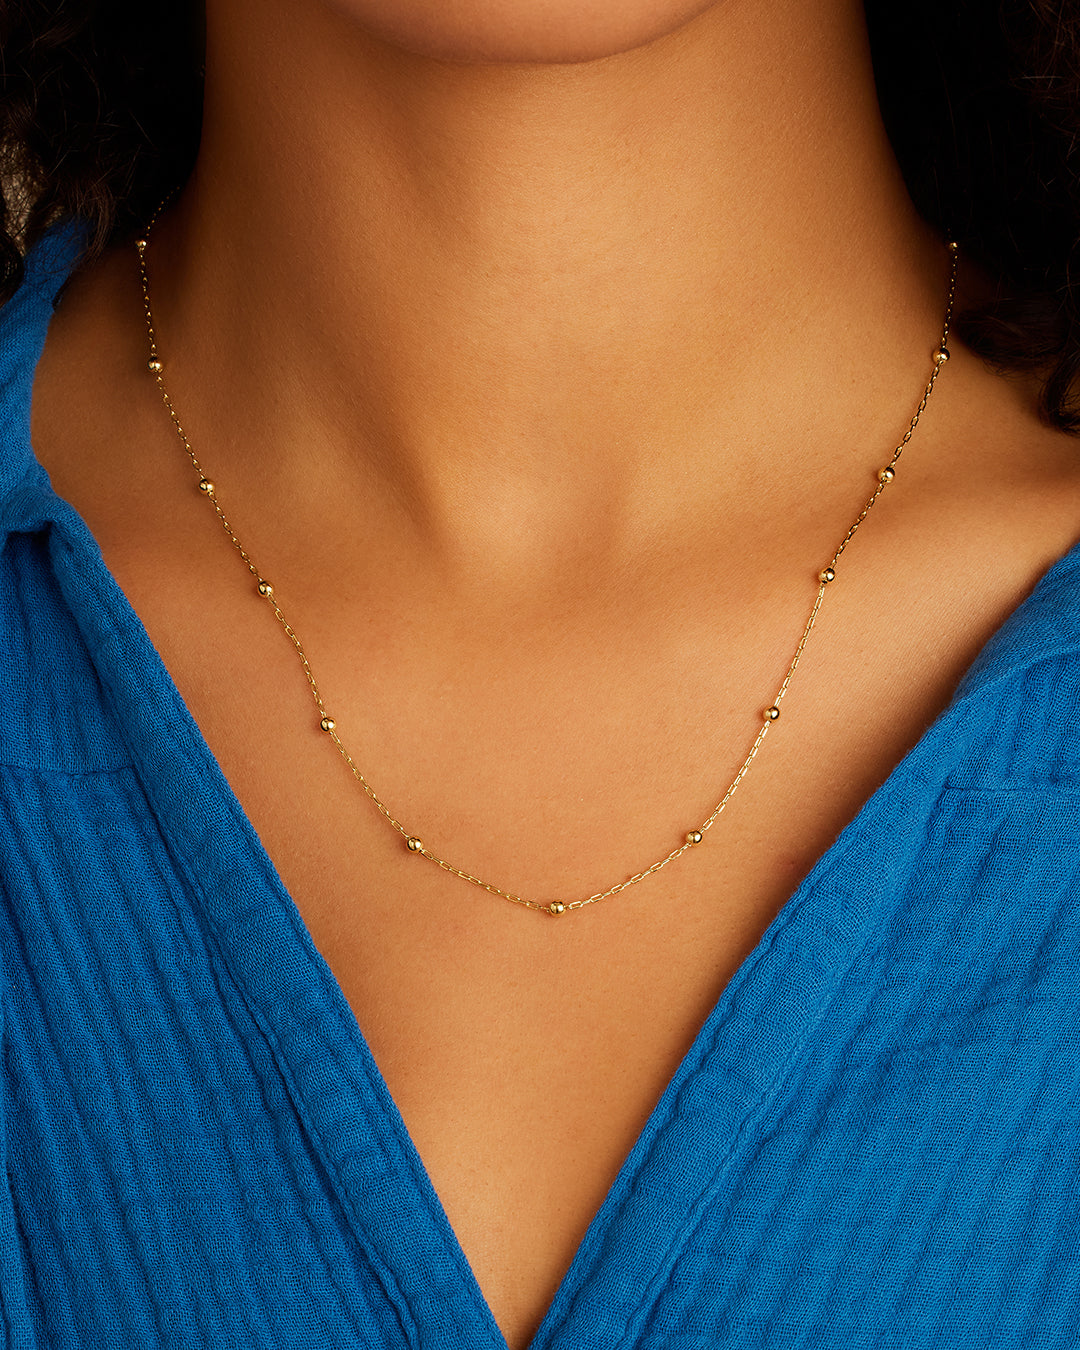 Gorjana Newport Chain Necklace-Gold